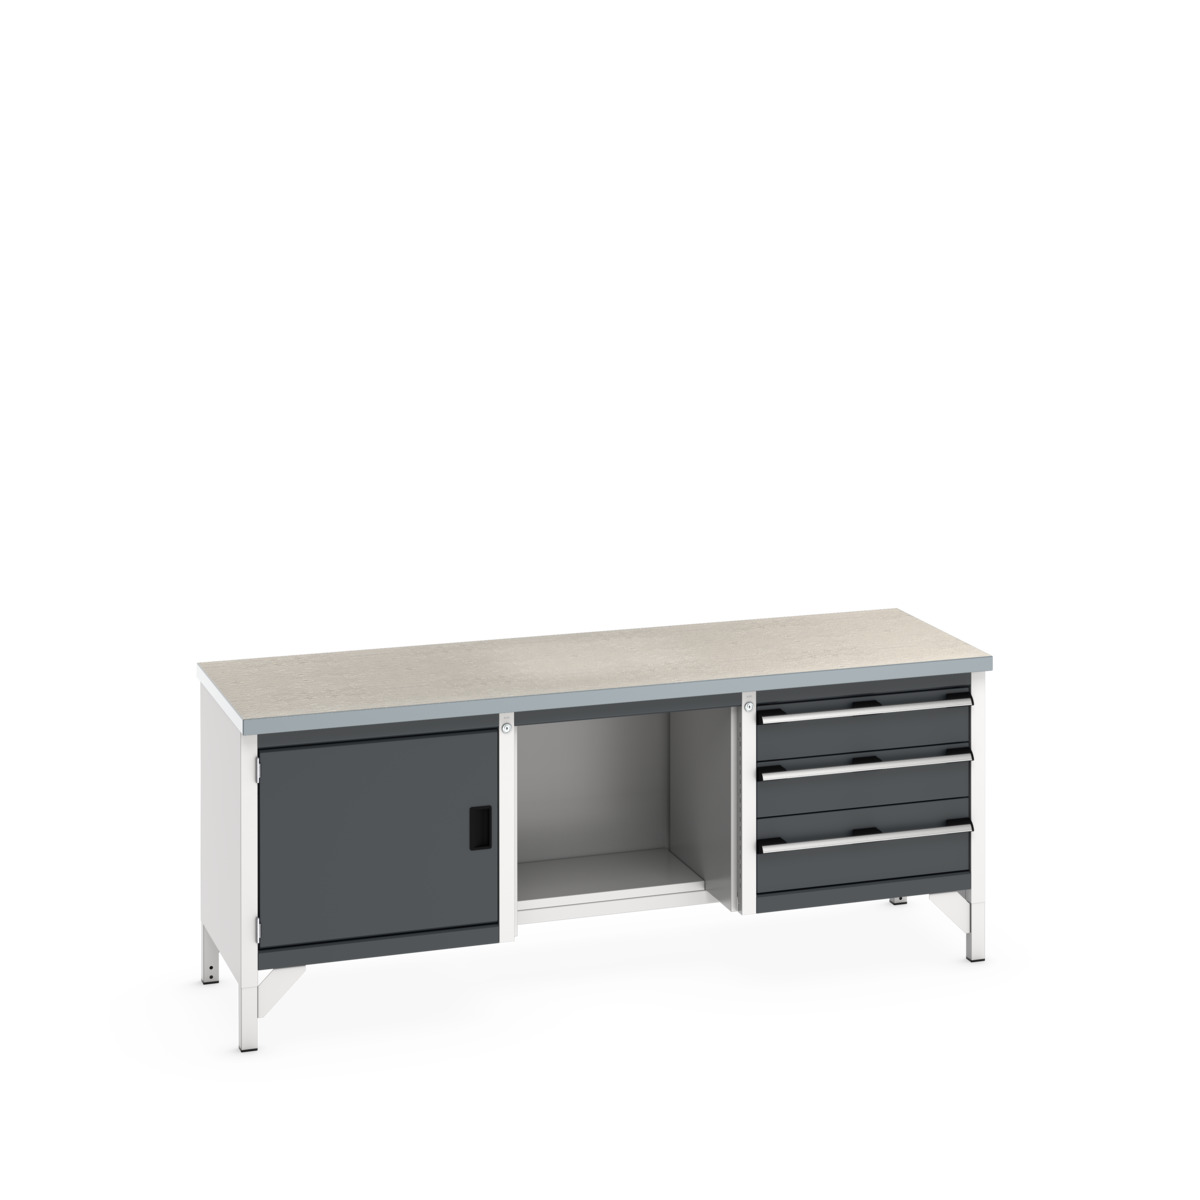 41002072. - cubio storage bench (lino)